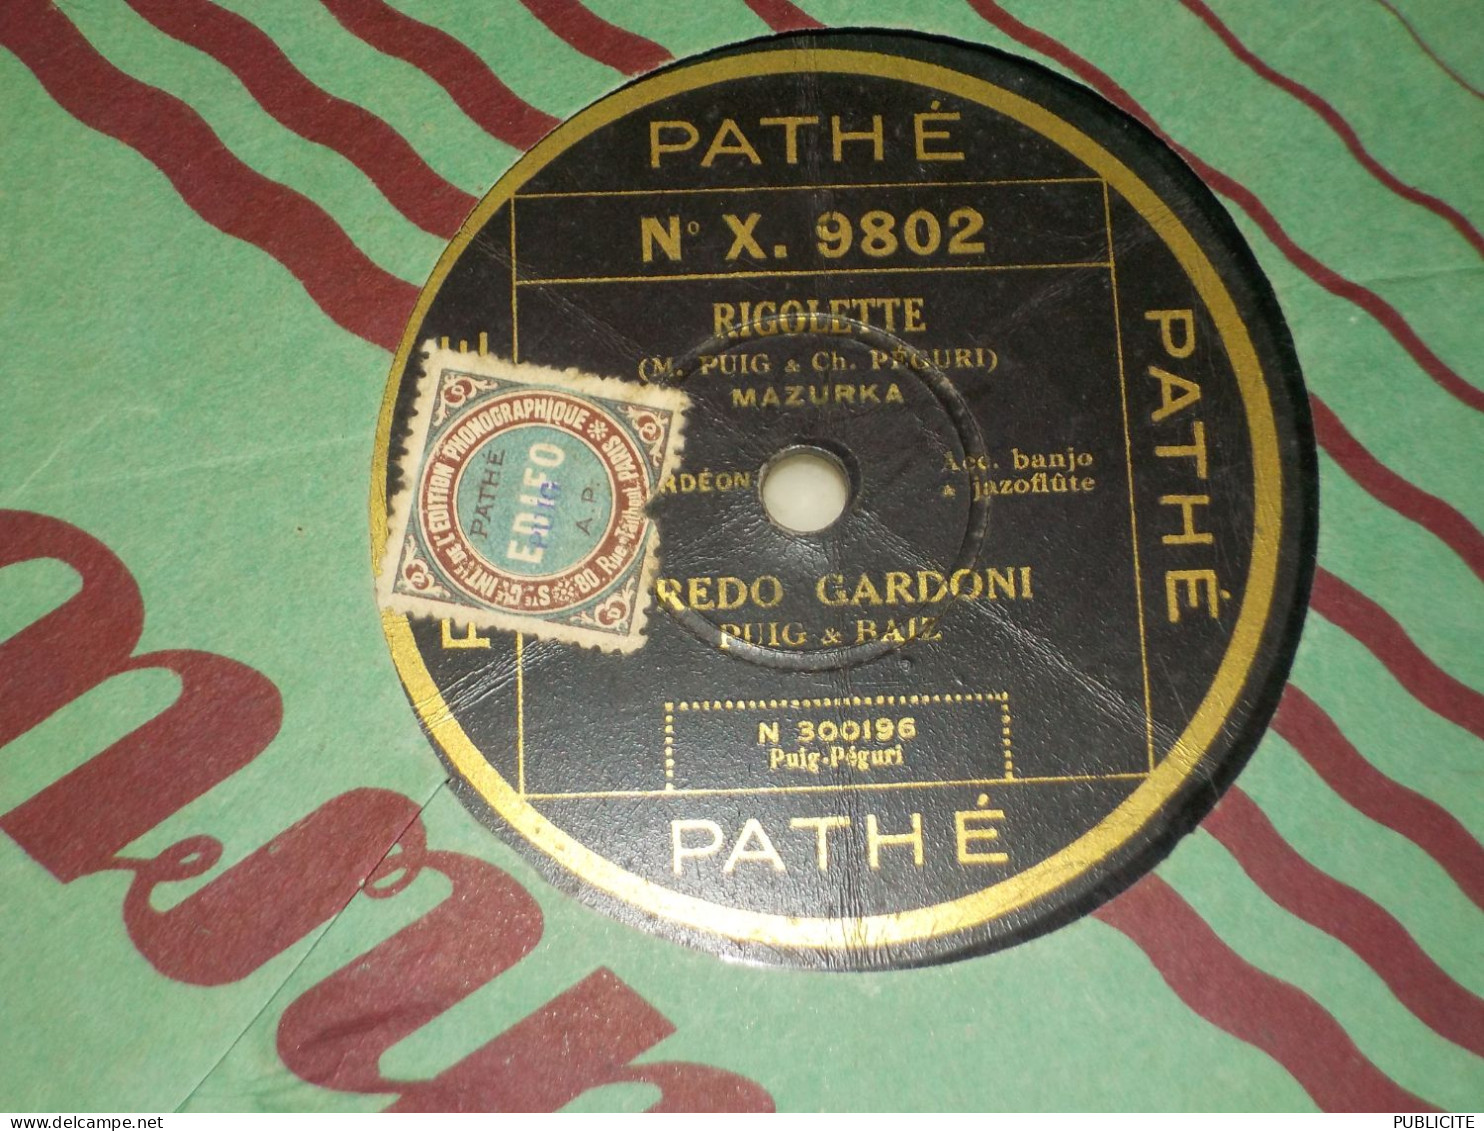 DISQUE 78 TOURS DE FREDO GARDONI 1932 - 78 T - Disques Pour Gramophone